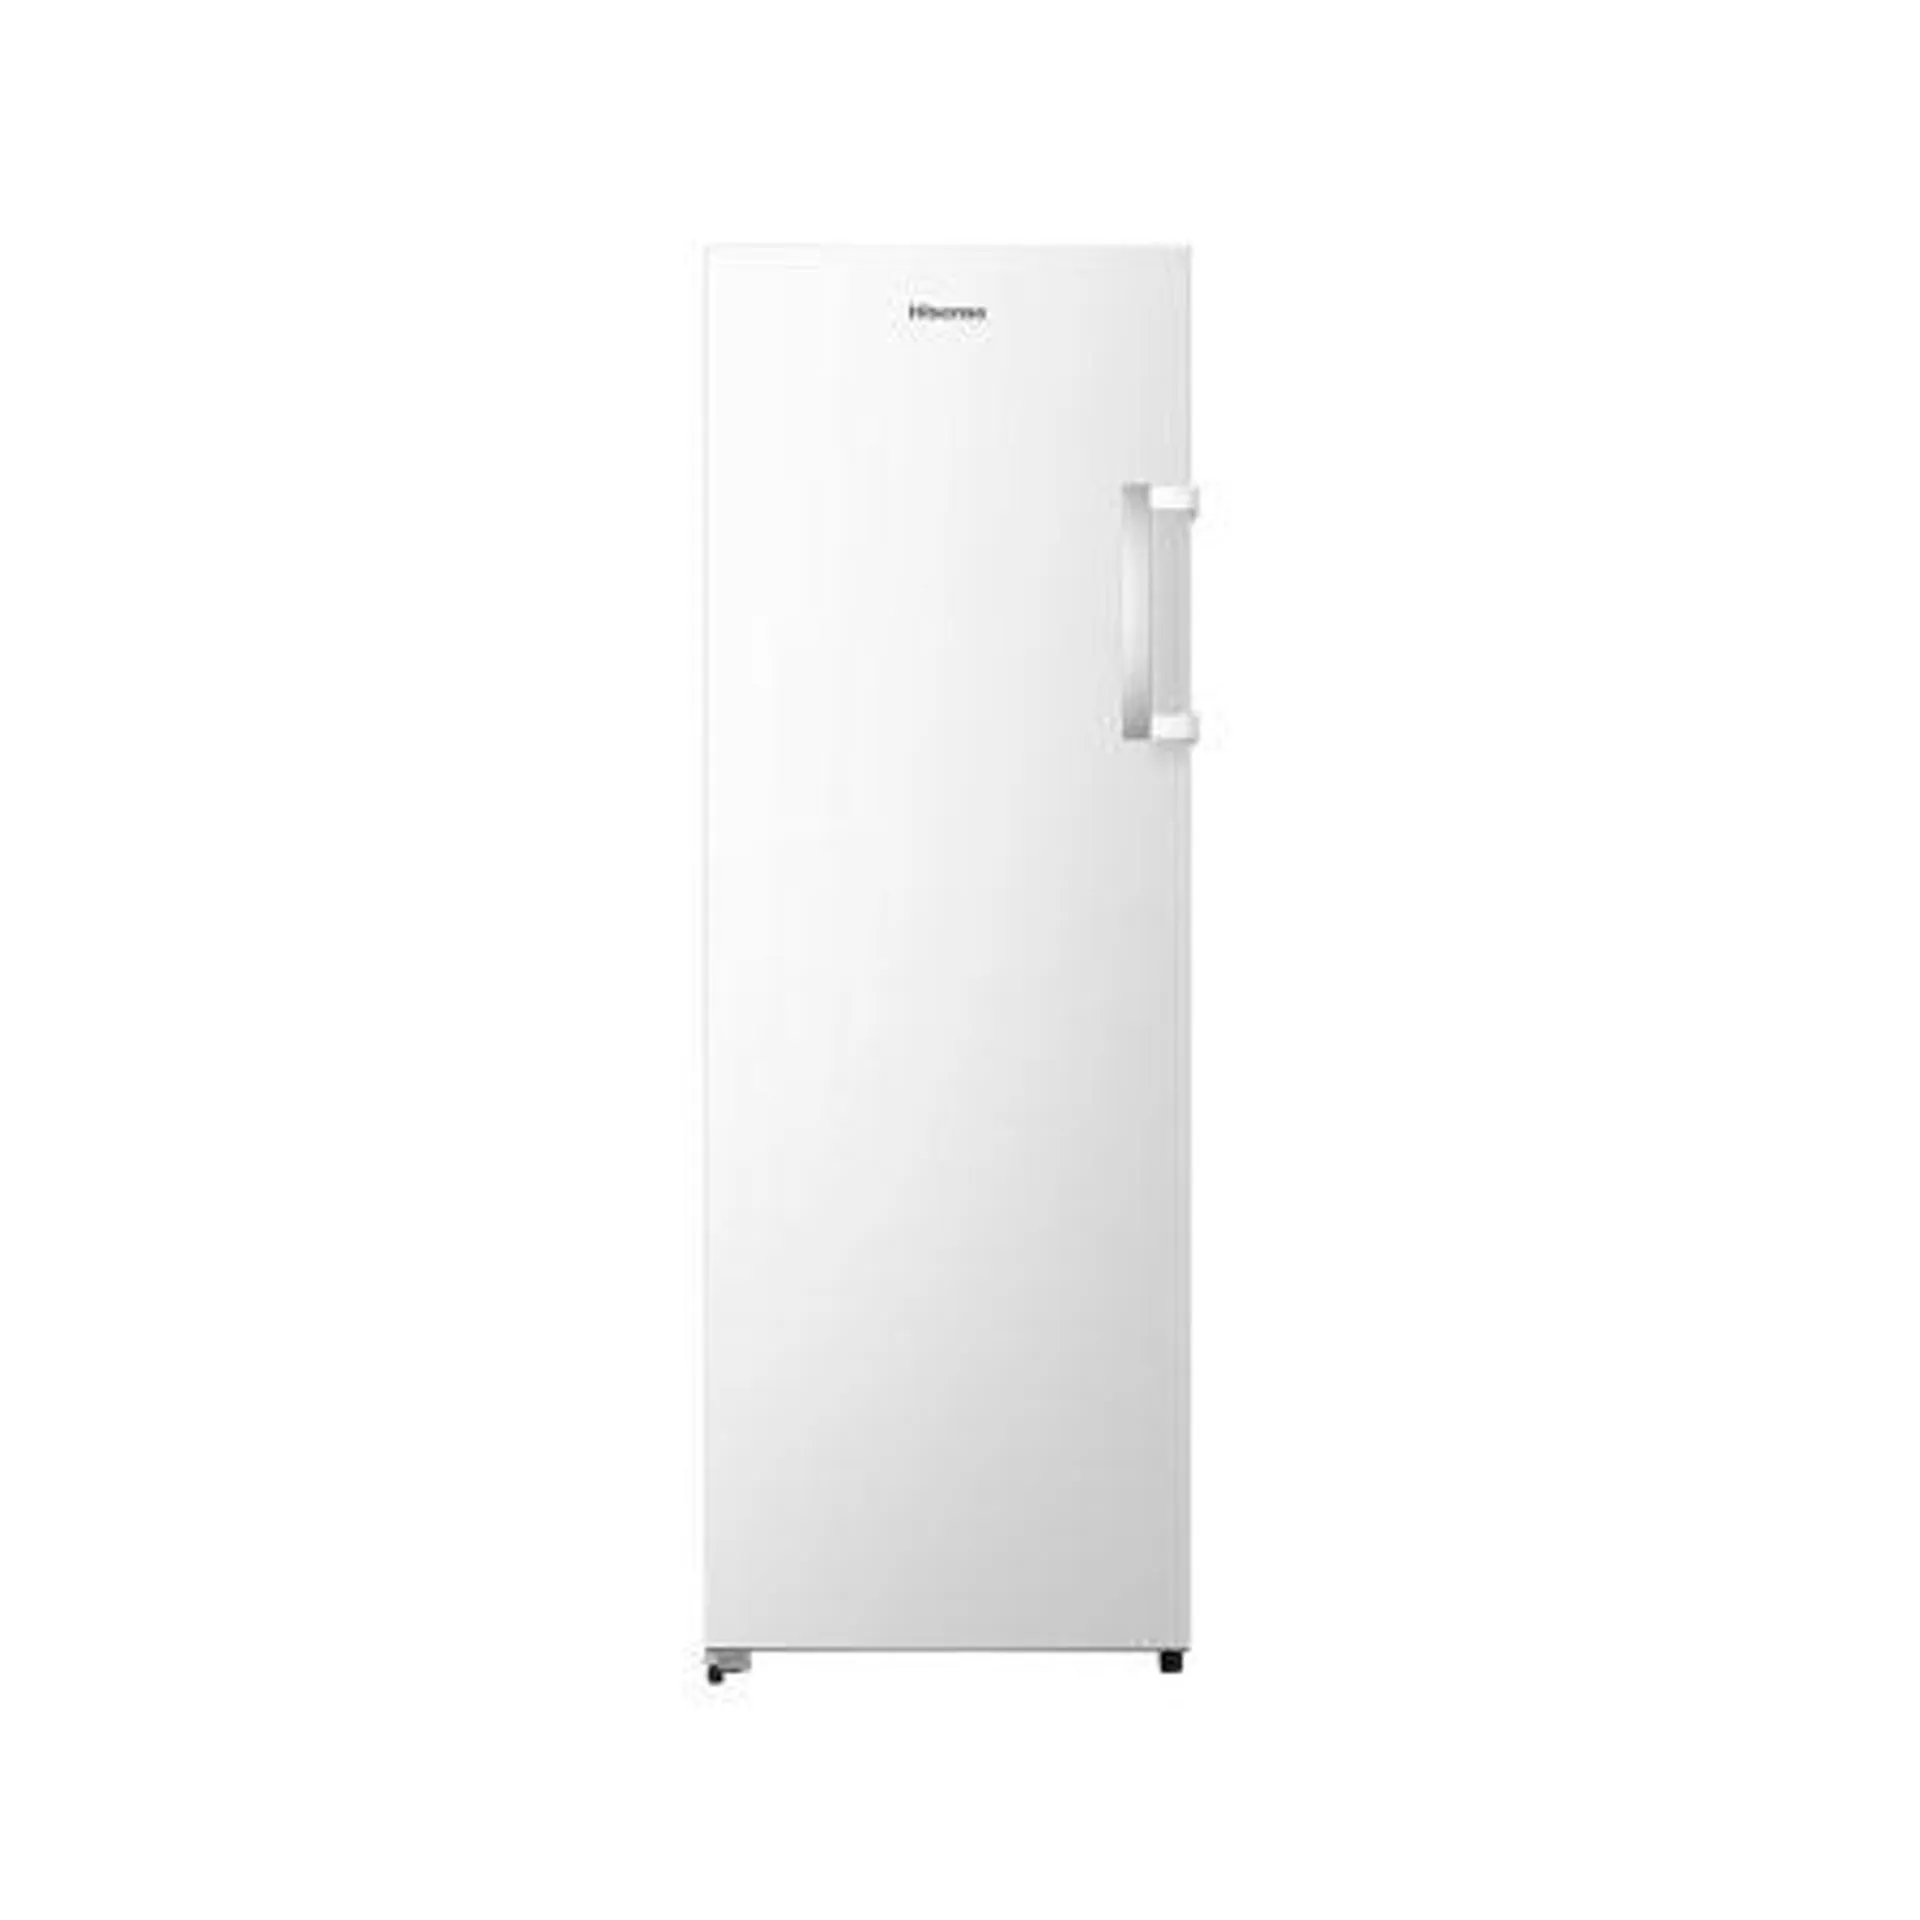 Freezer Hisense Vertical / Uv277Nw 229 Litros